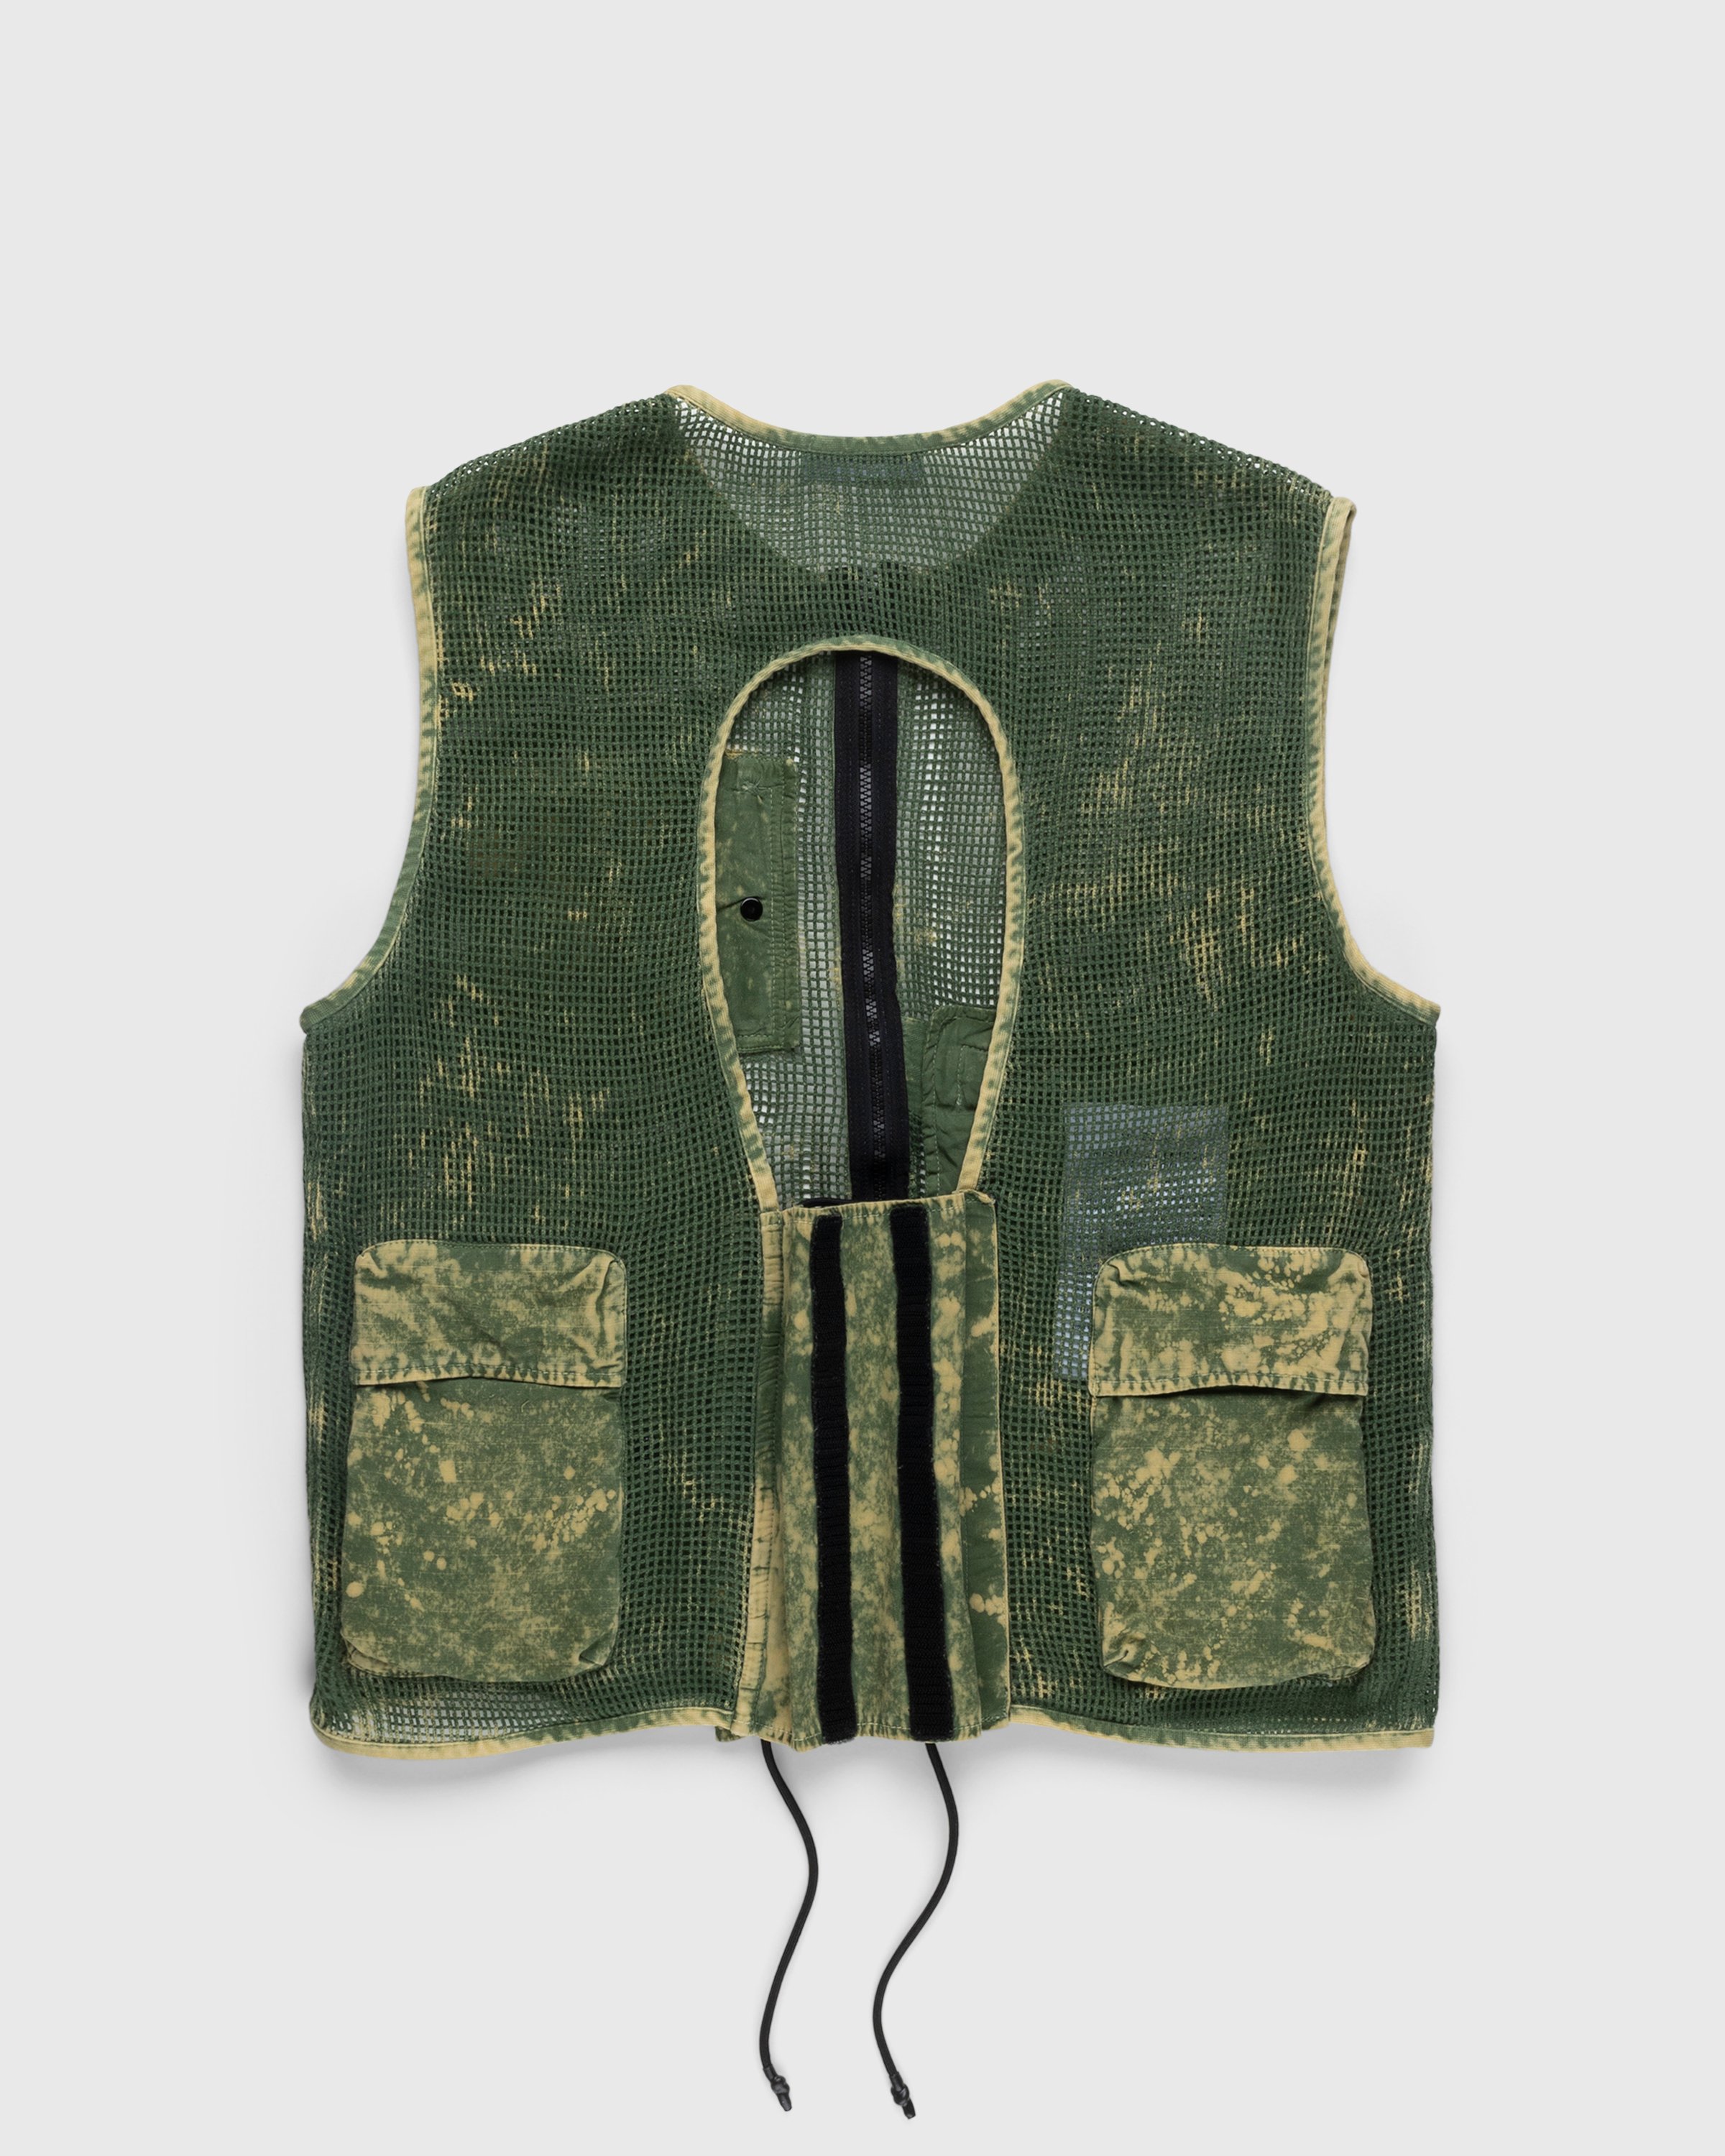 Stone Island - G0622 Garment-Dyed Cotton Mesh Vest Olive - Clothing - Green - Image 2